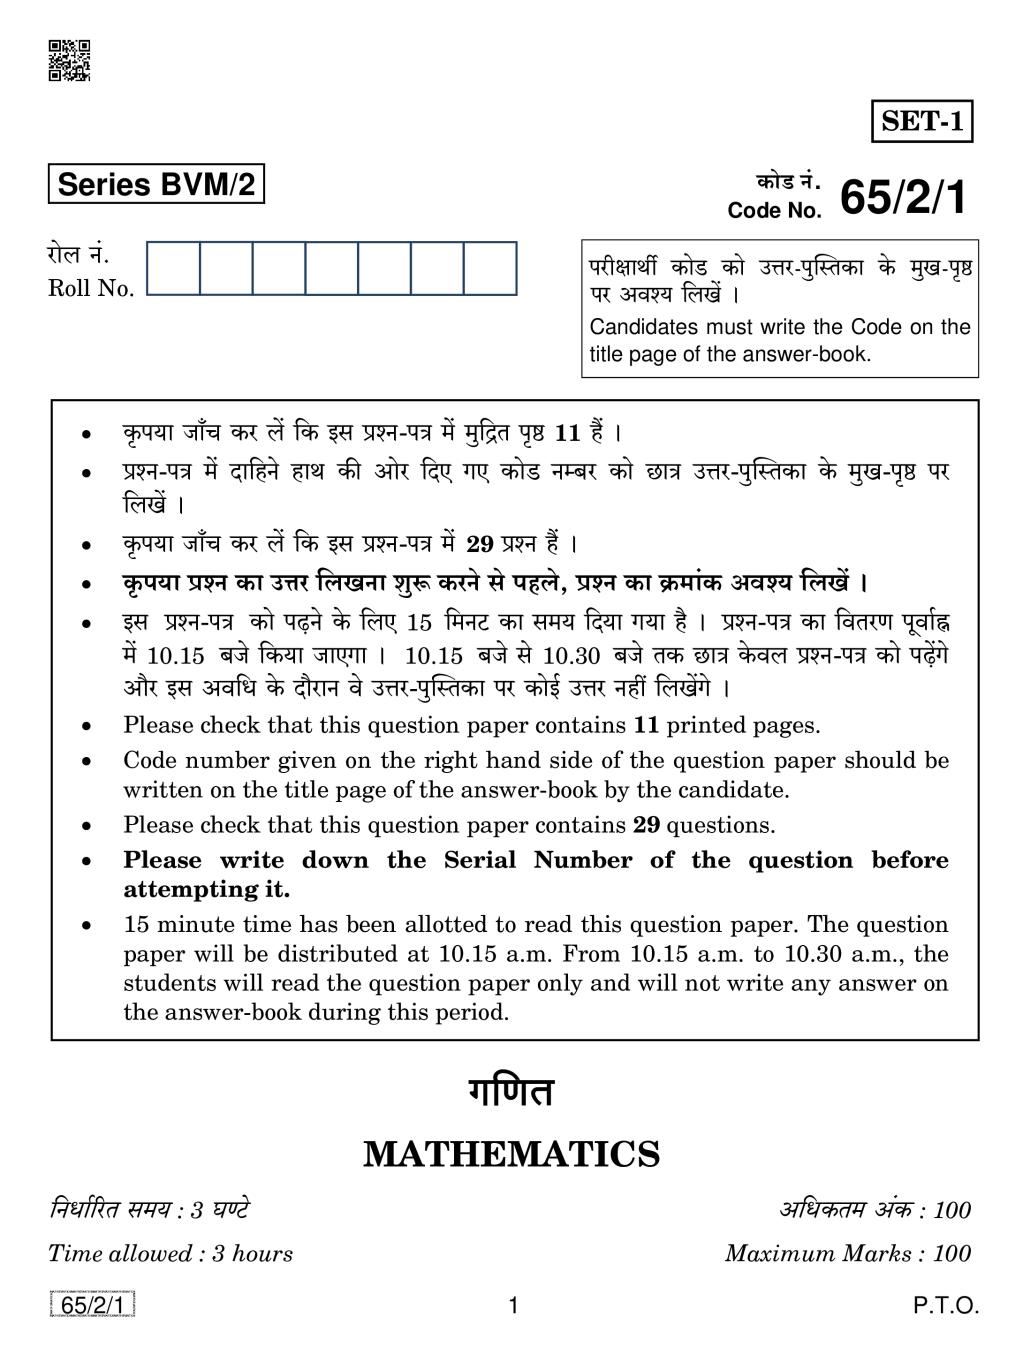 CBSE Class 12 Mathematics Question Paper 2019 Set 2 - Page 1